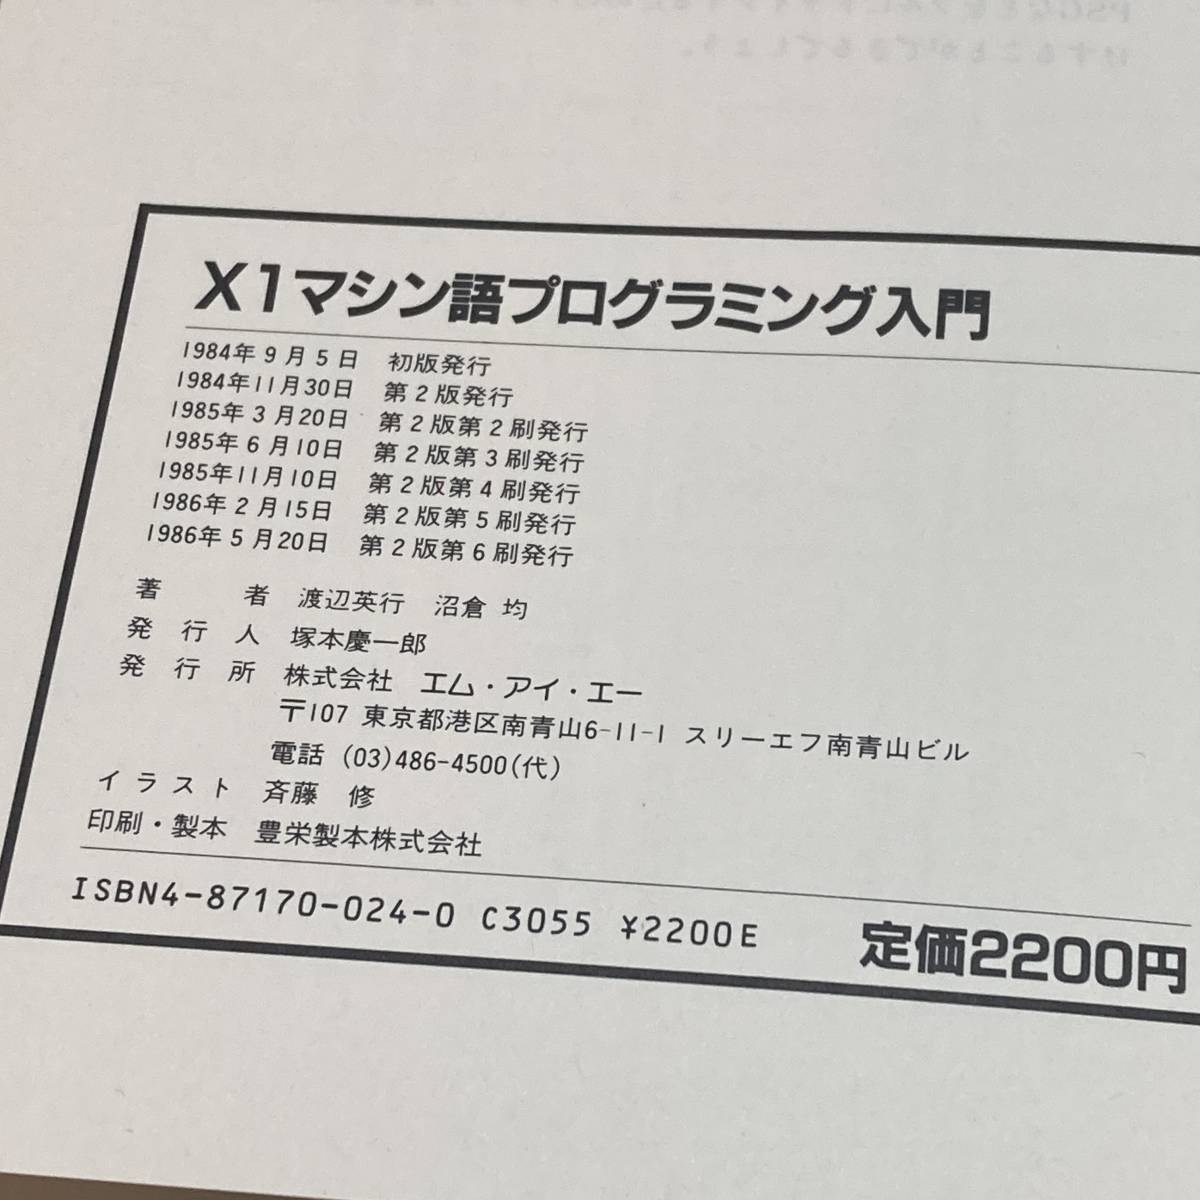 X1 series machine language programming introduction Watanabe britain line MIA 1986 year [A33]